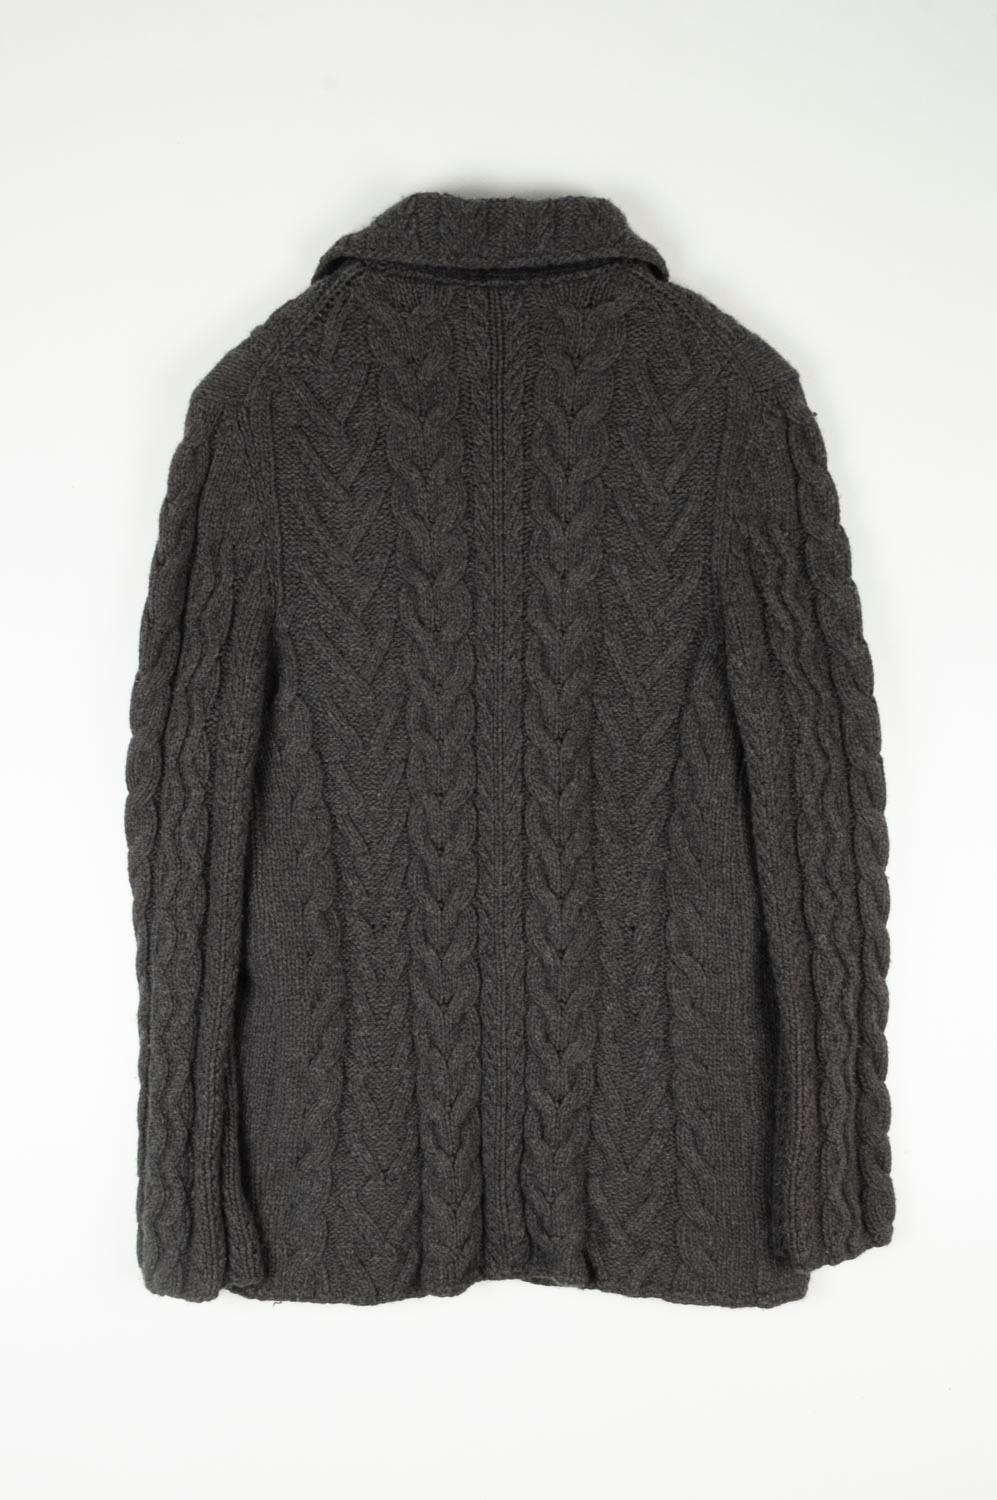 Men's Jil Sander Men Cardigan Heavy Knit Sweater Size 54 (Large), S549-1 For Sale